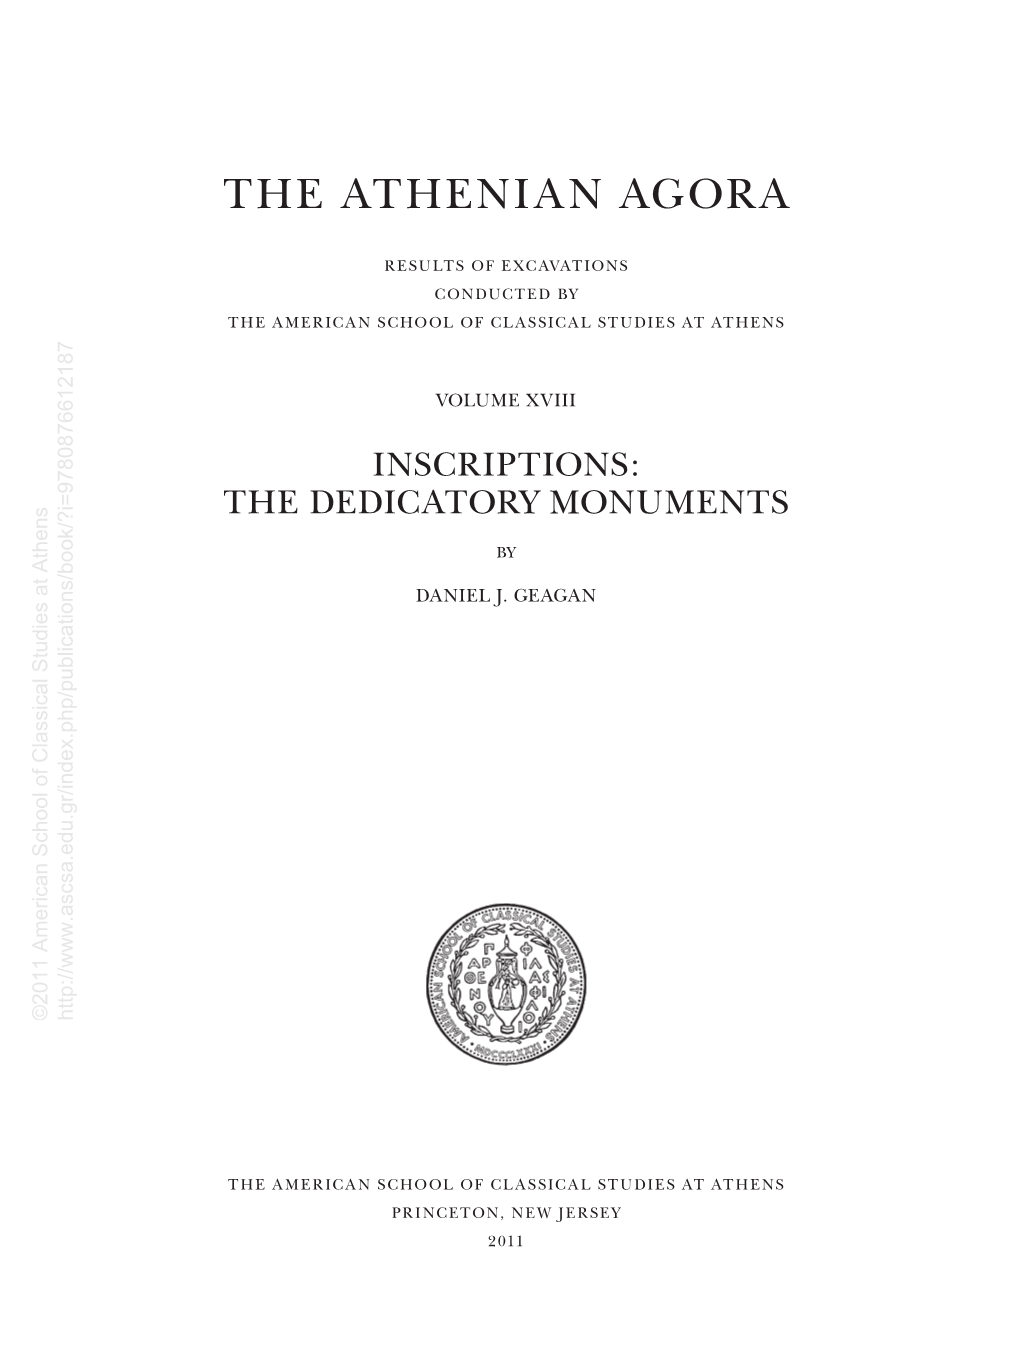 The Athenian Agora